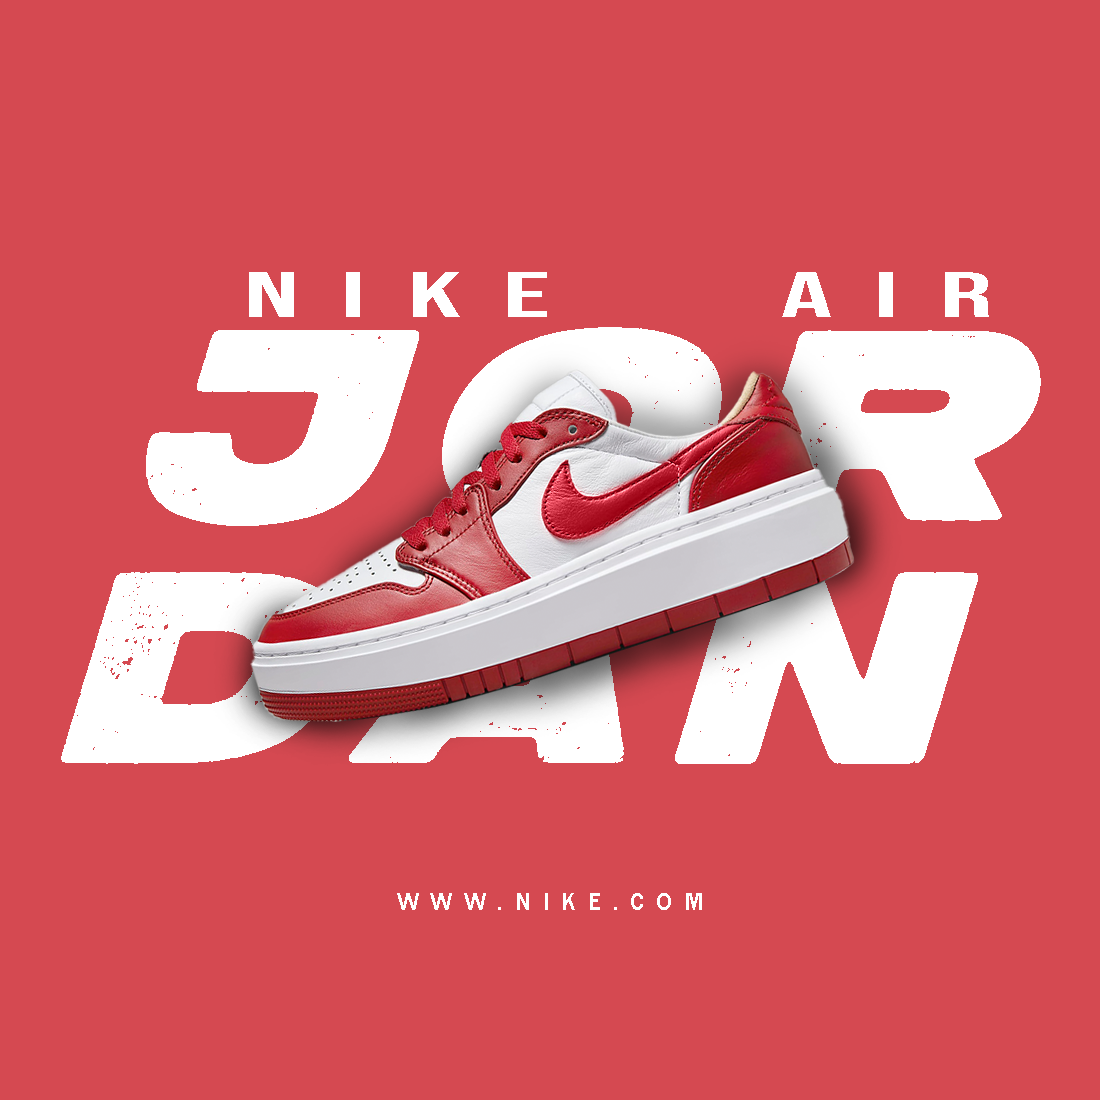 Air Jordan 1 Elevate Low Shoes Poster preview image.